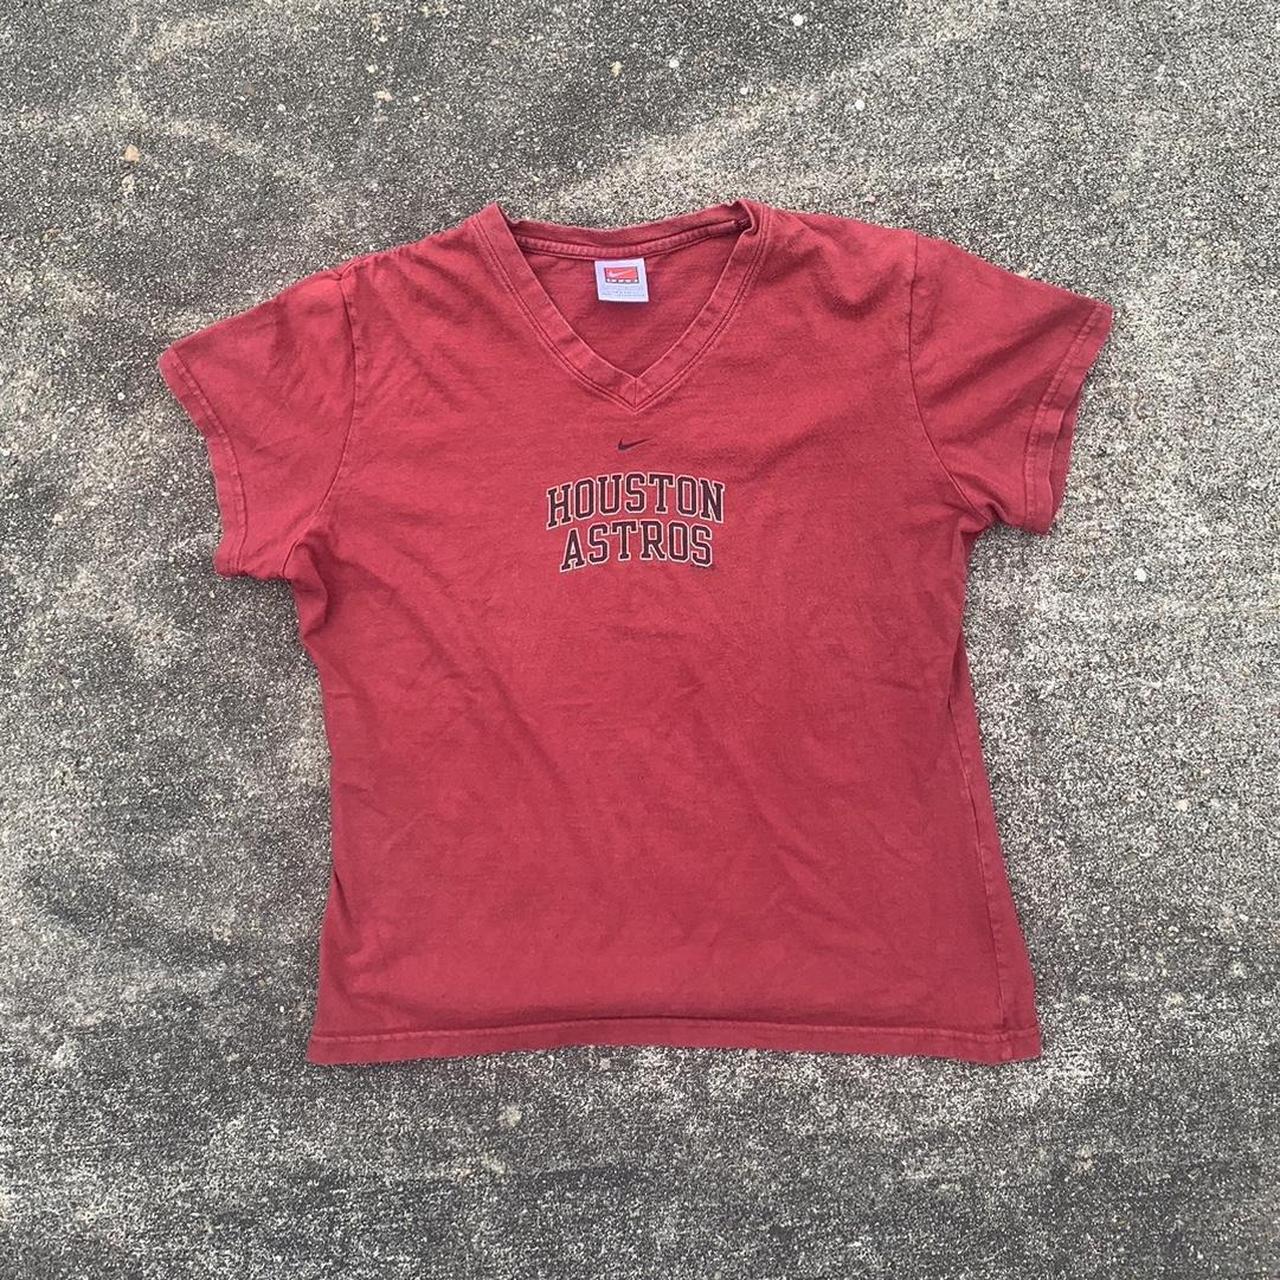 Nike Houston Astros center swoosh T-shirt Size XL